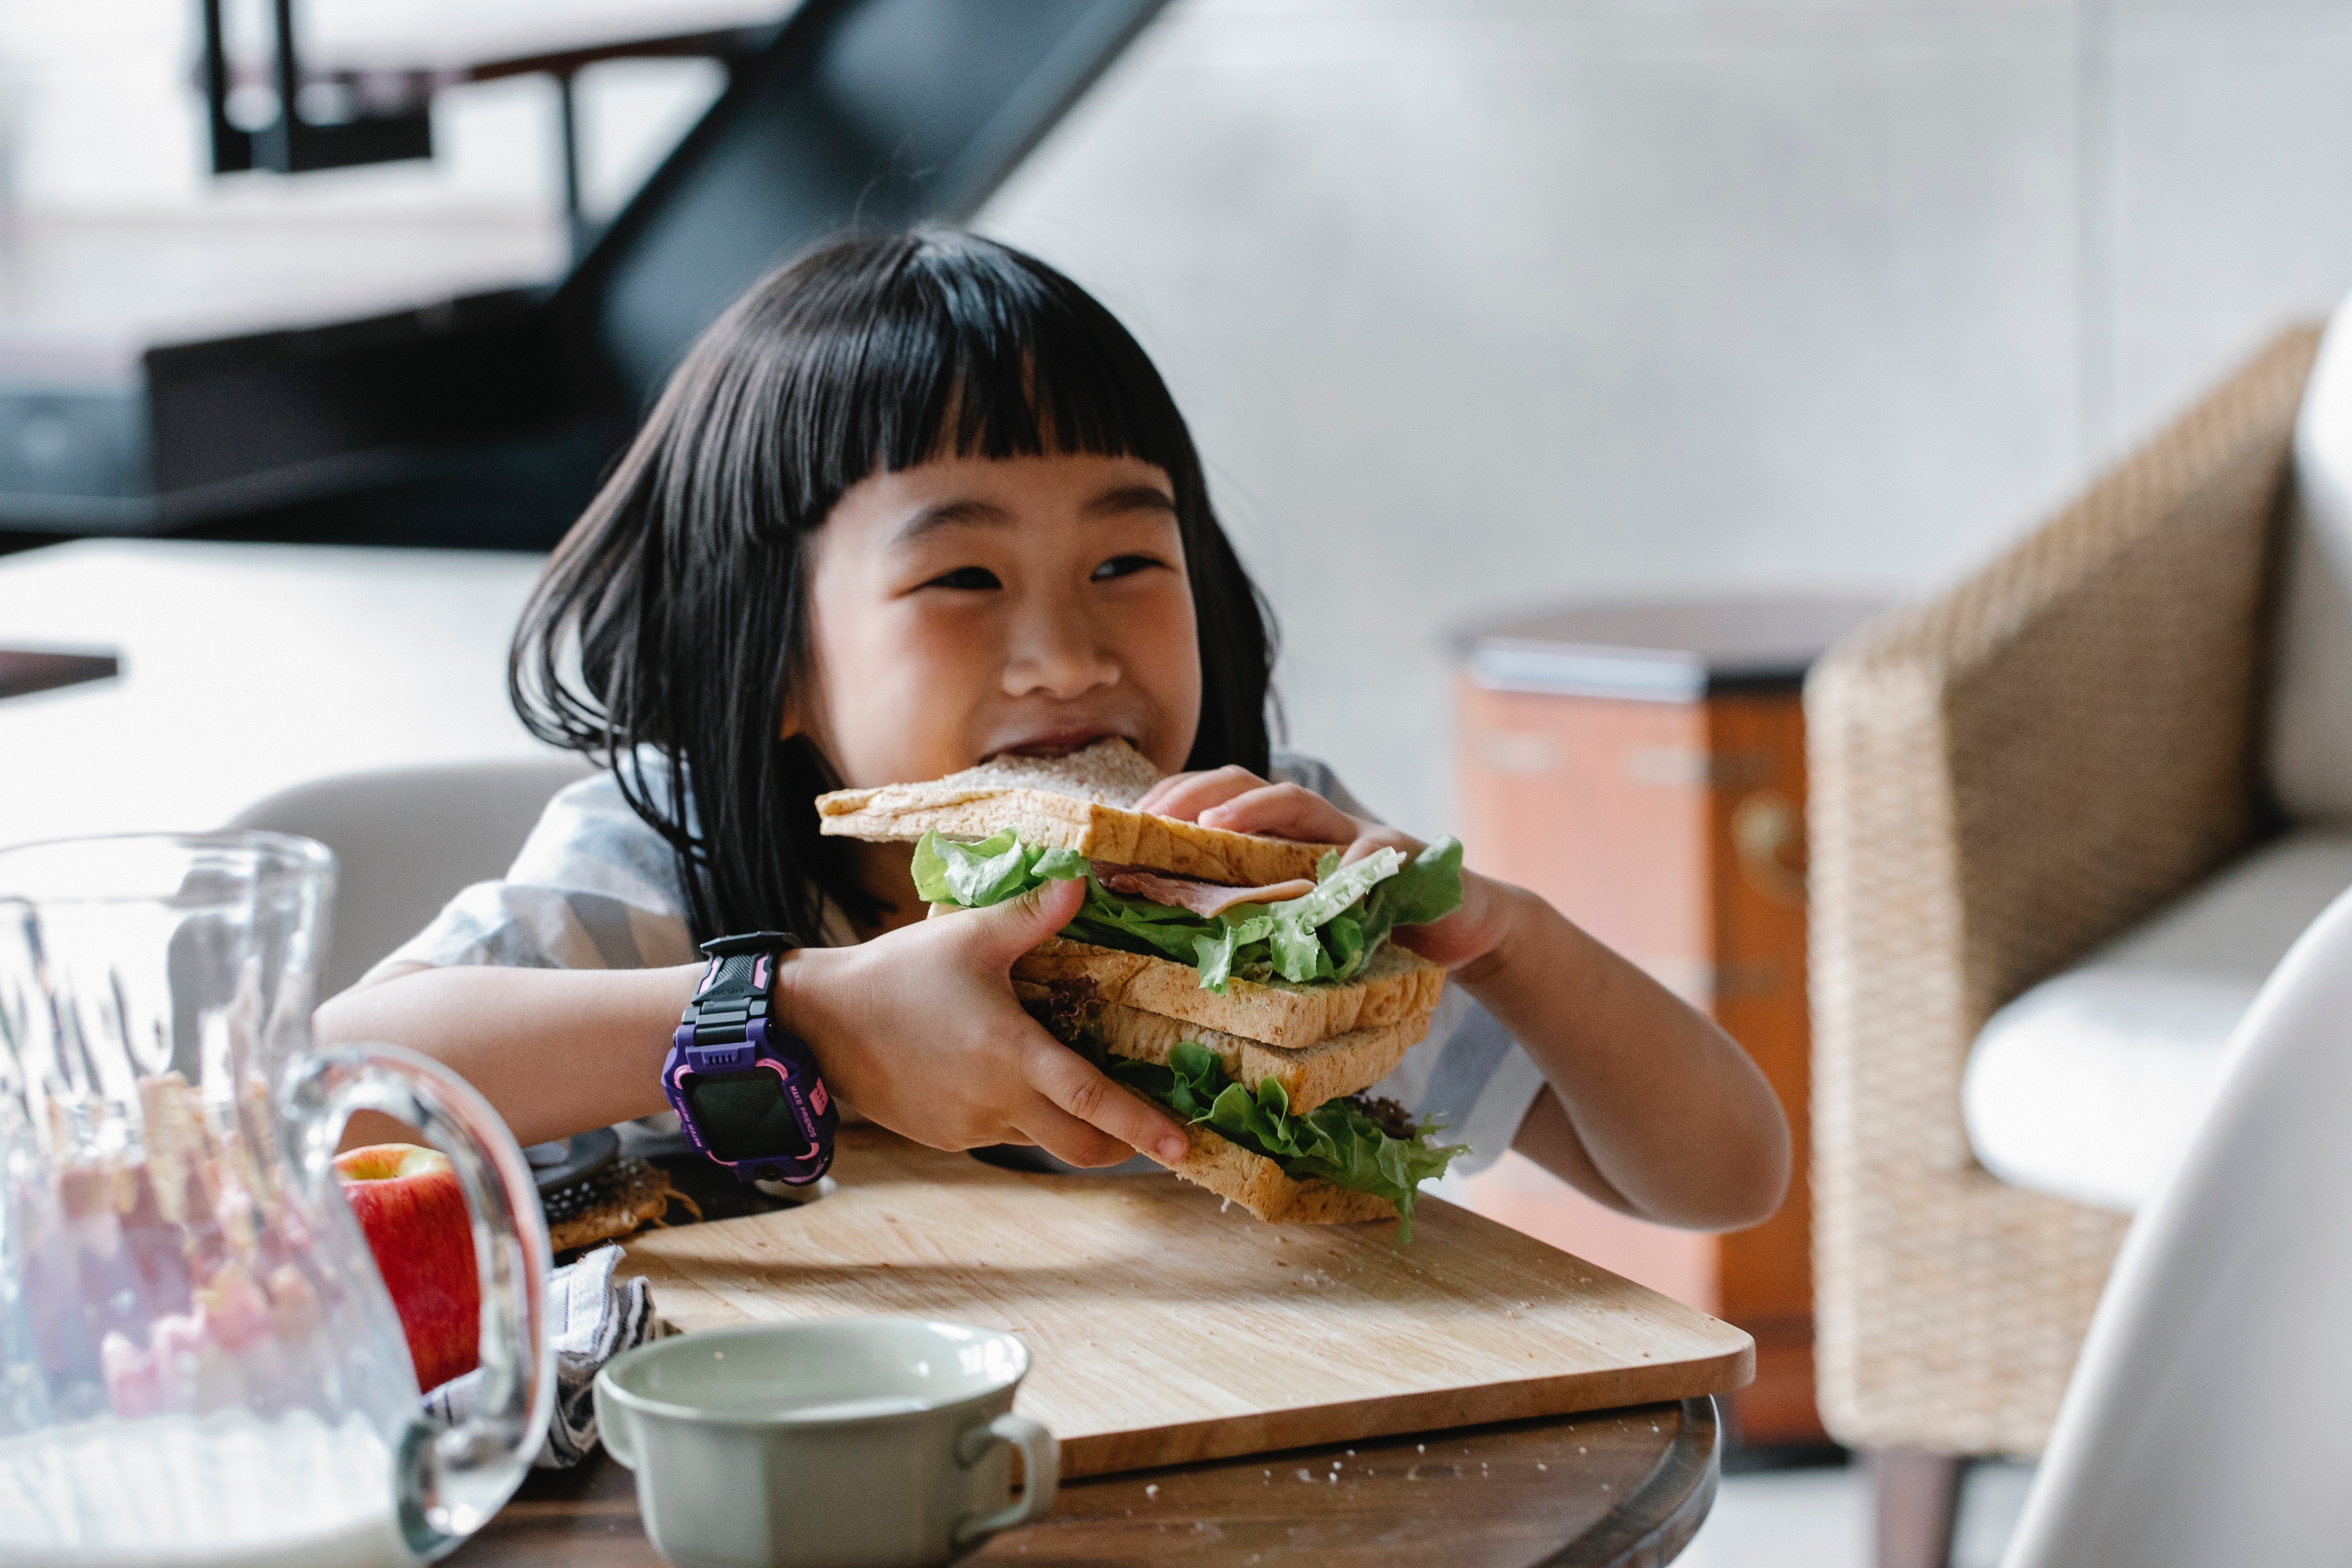 Smiling child eating large sandwich